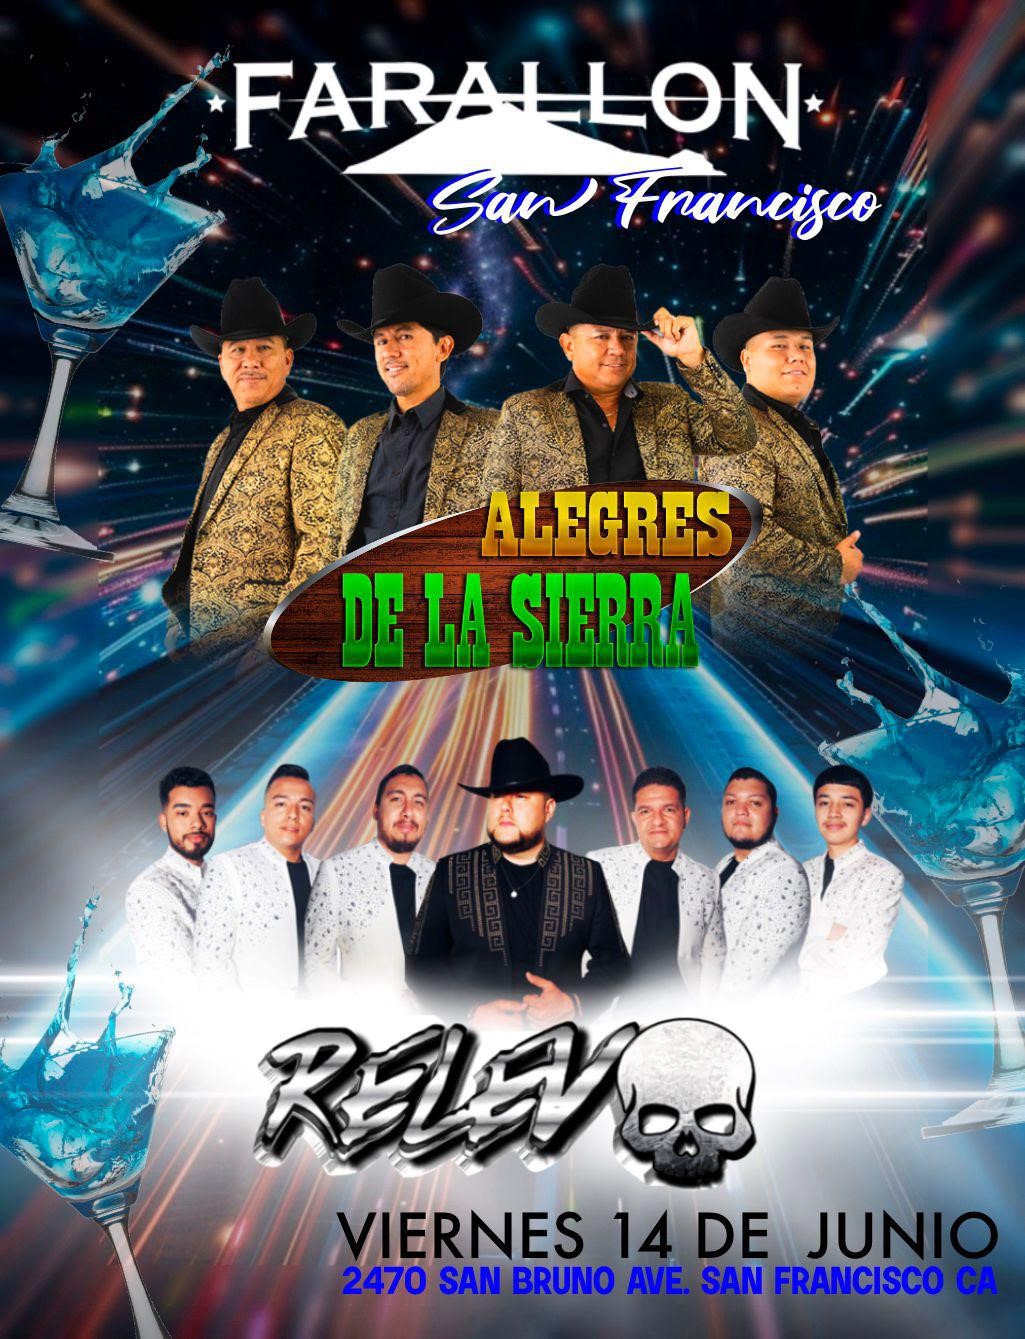 ALEGRES DE LA SIERRA  on Jun 14, 21:00@TORO SAN FRANCISCO - Buy tickets and Get information on farallonpresenta farallonpresenta